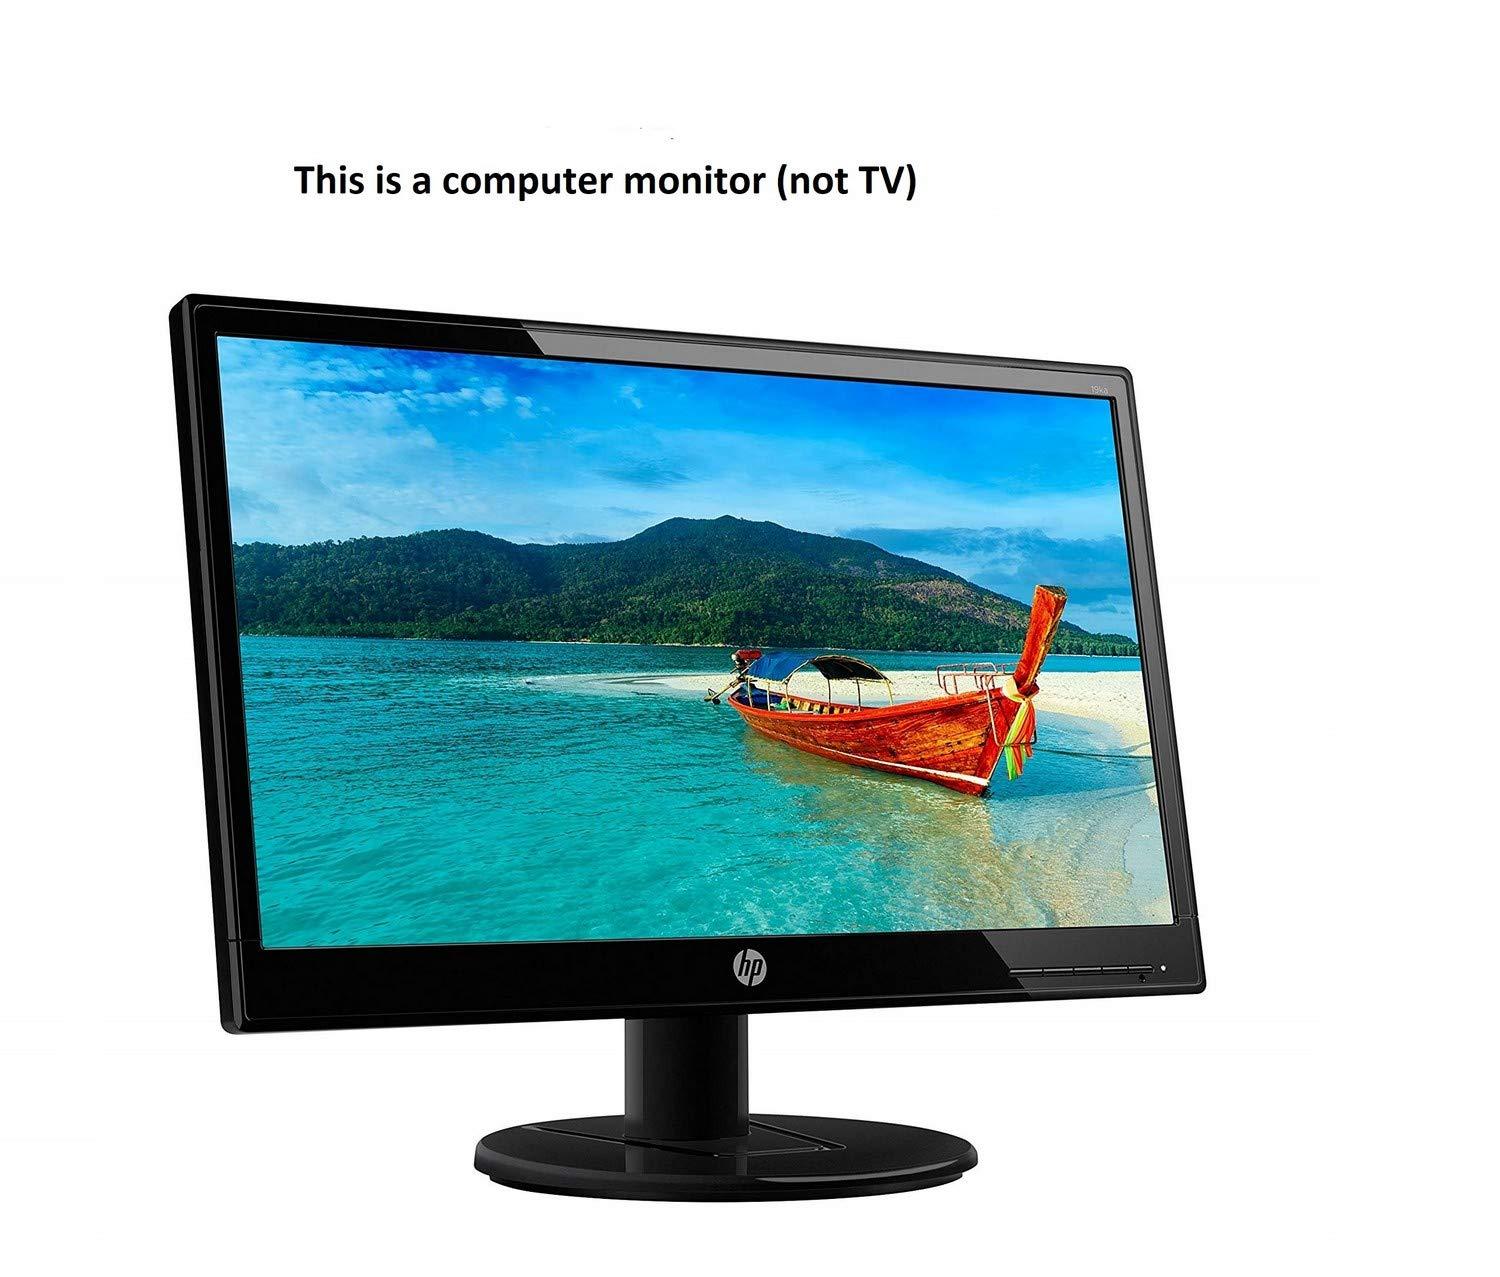 HP 19ka  (18.5) Inch Monitor Computer Accessories